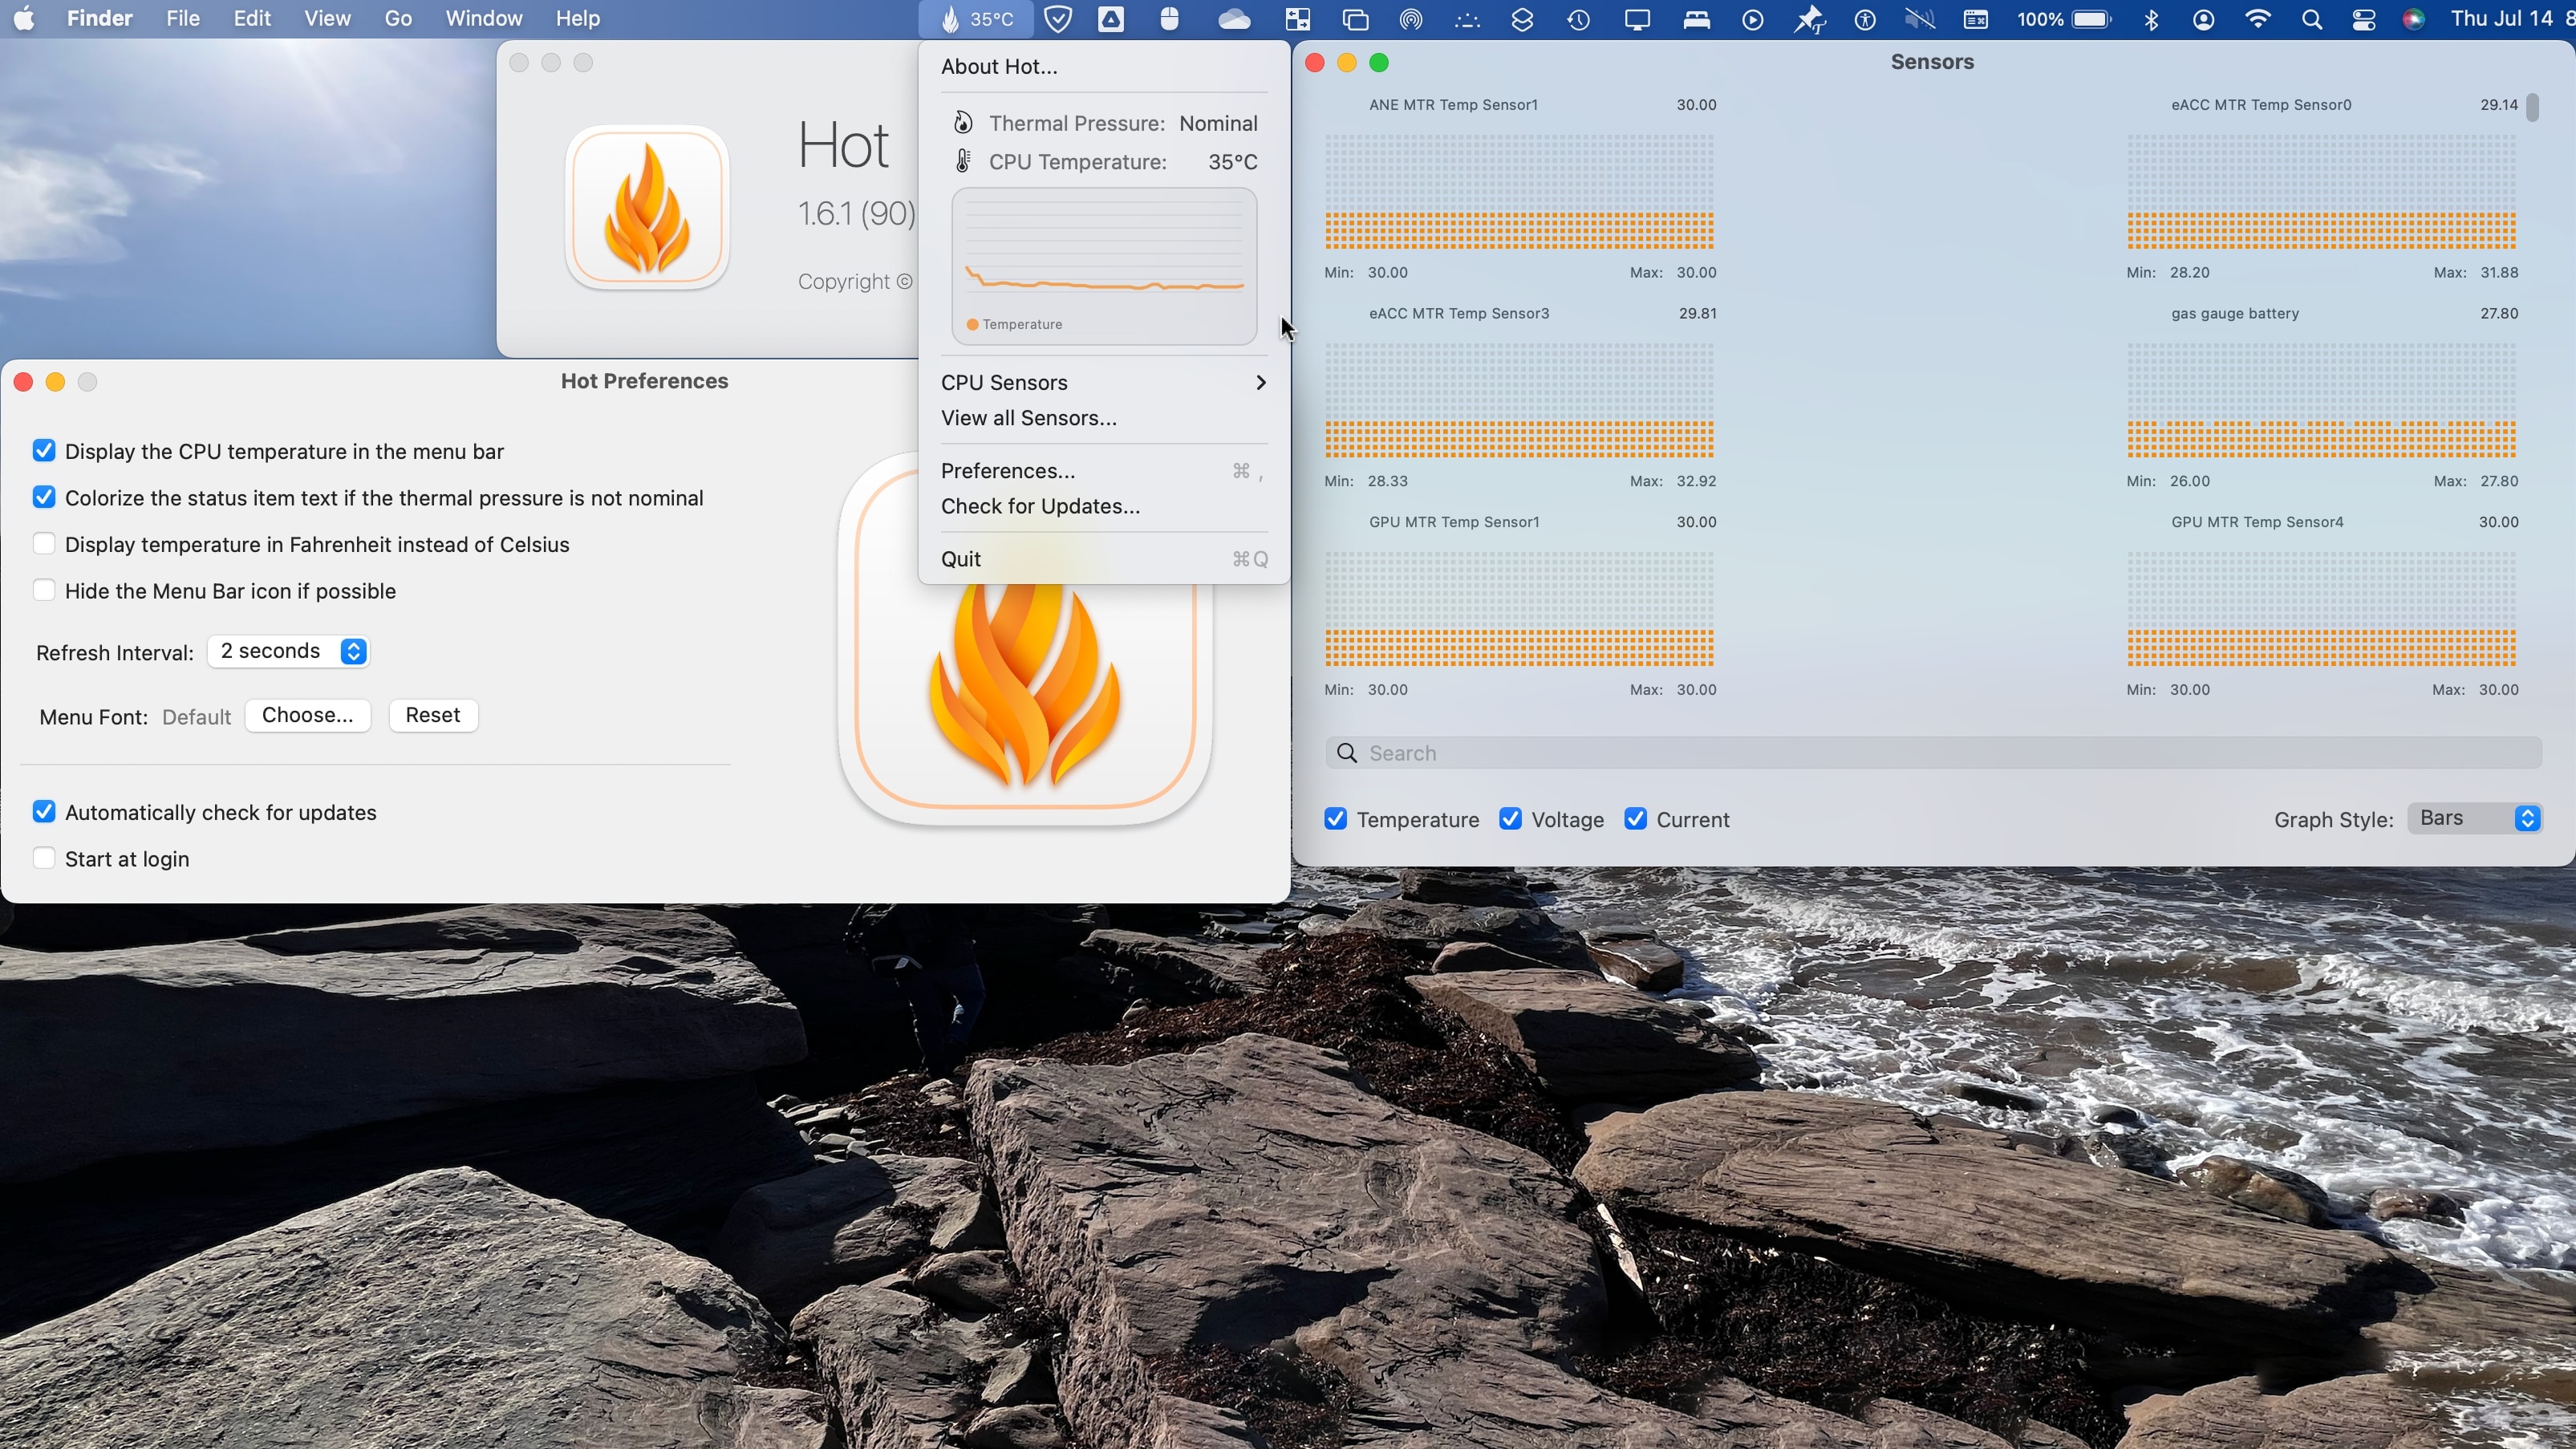 The Hot app can display CPU temperatures in Celsius or Fahrenheit.